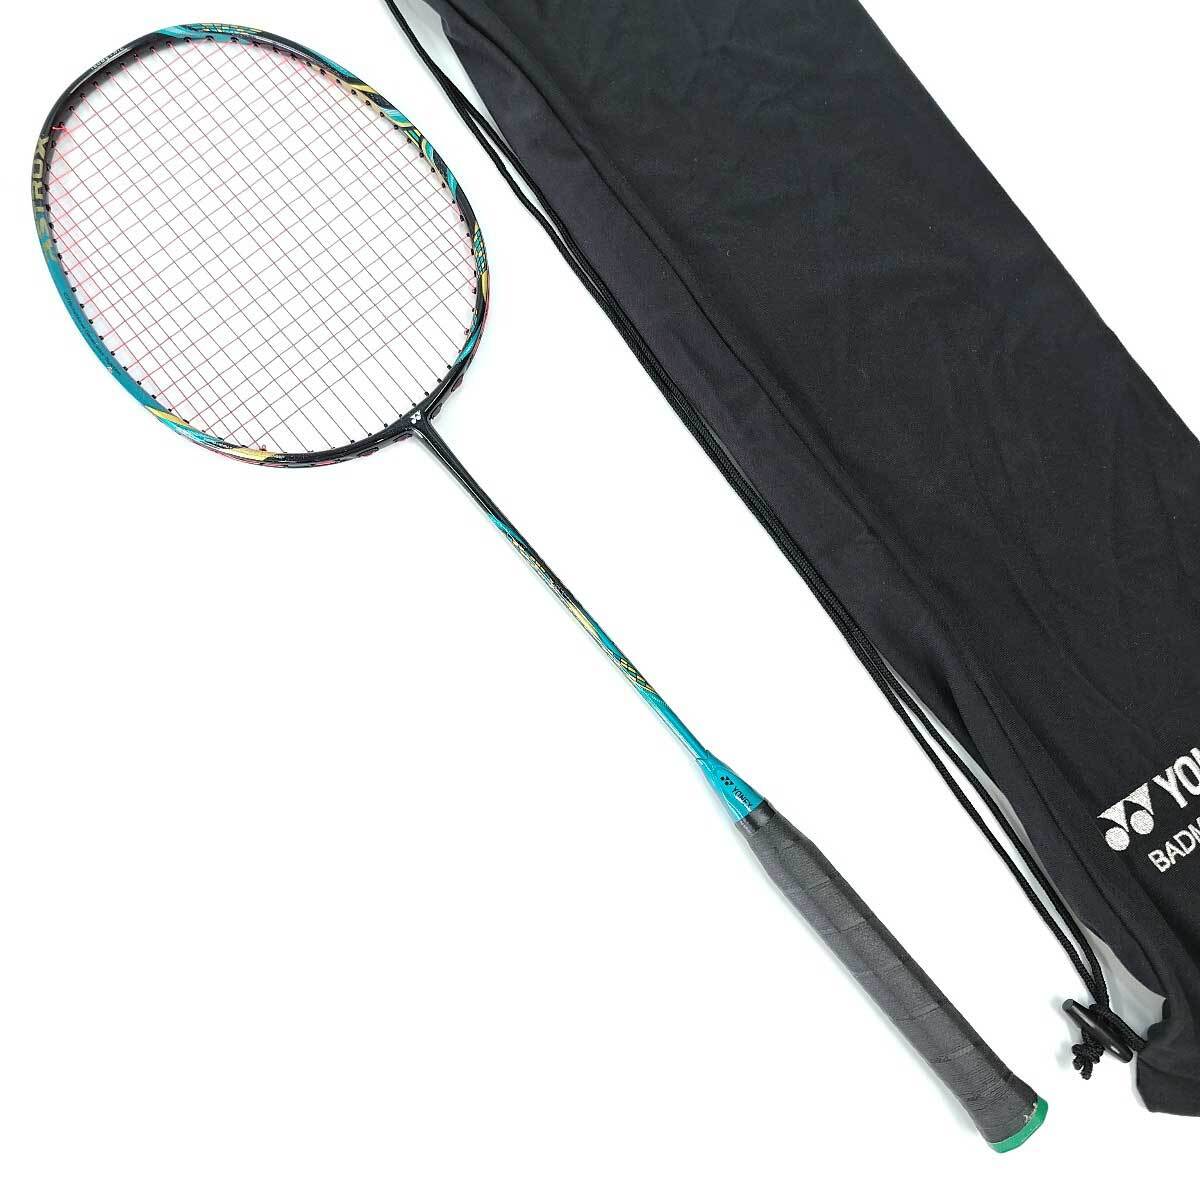 [ used ] Yonex Astro ks88S Pro badminton racket ASTROX88S PRO 3UG5 YONEX